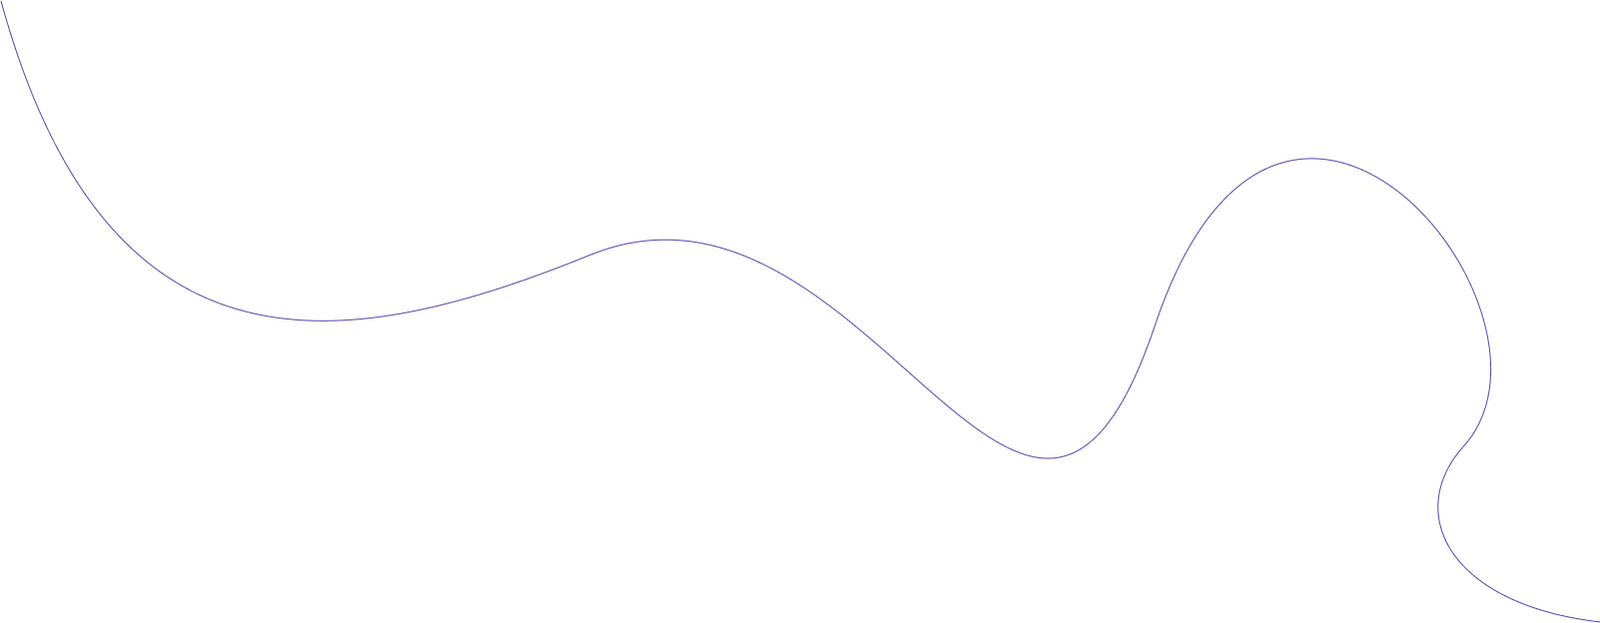 curve line